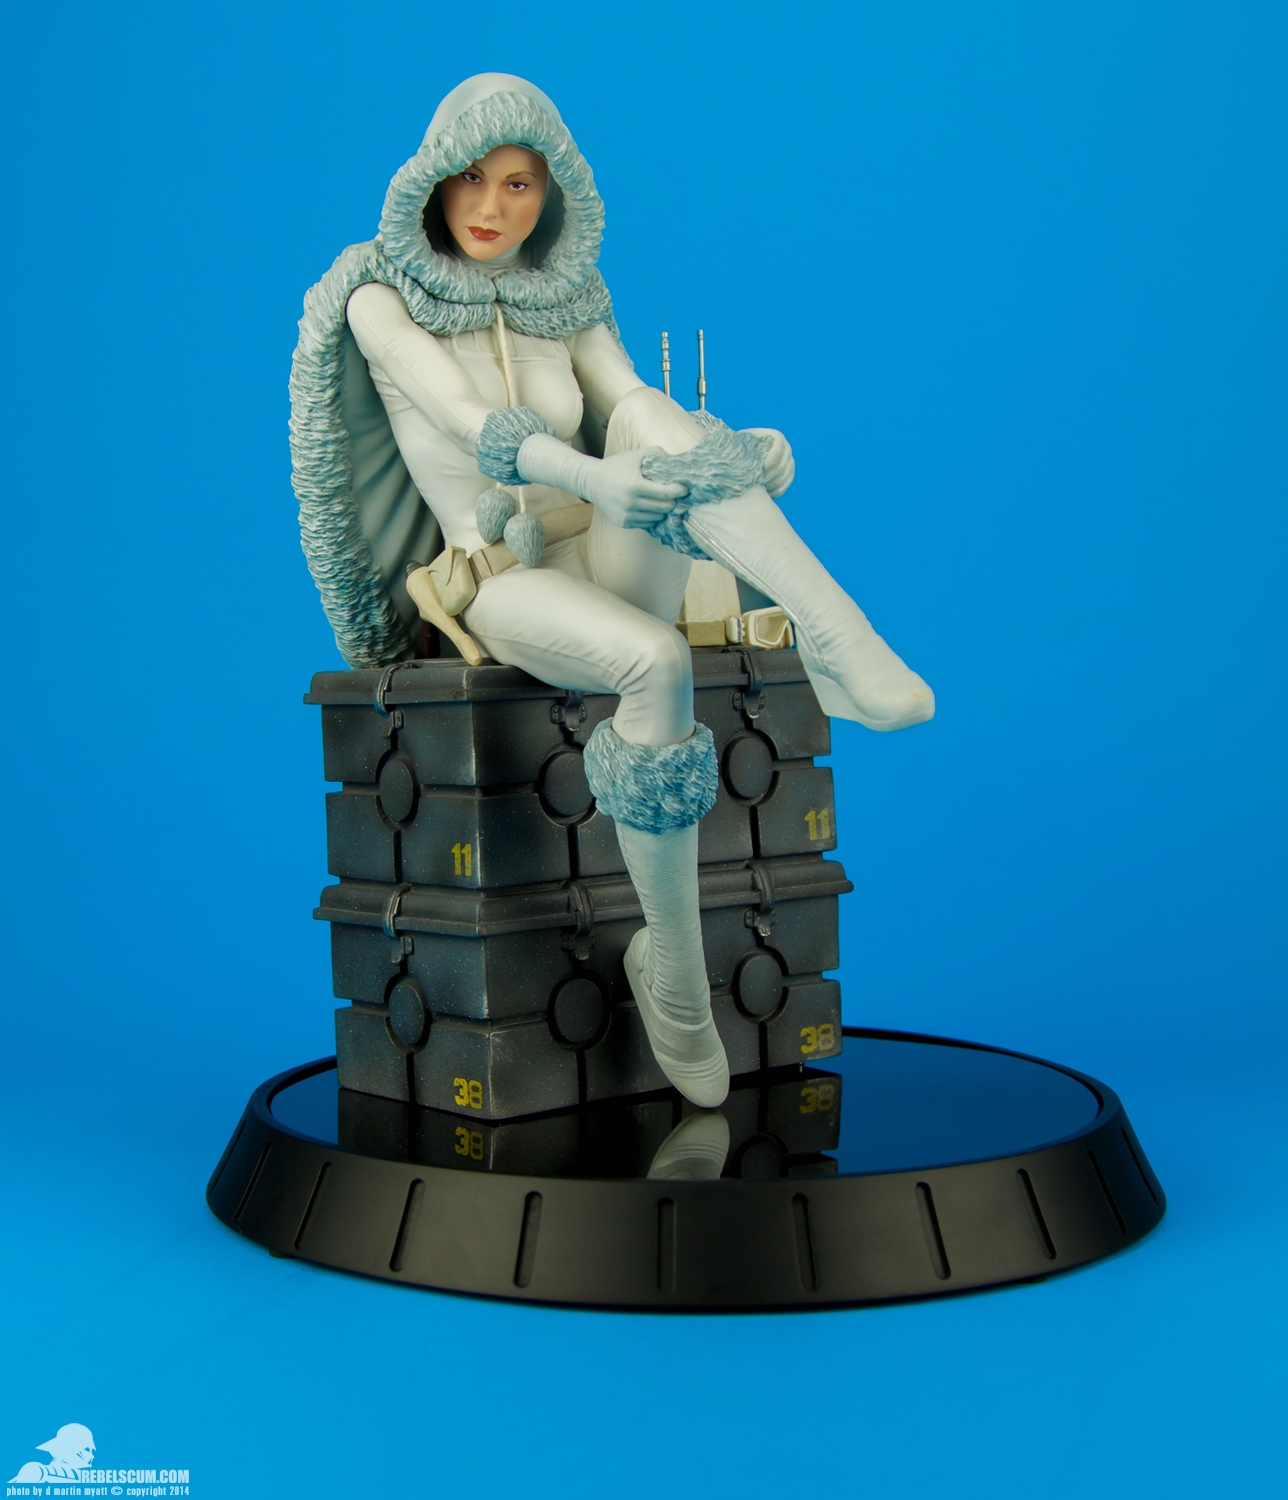 Padme-Amidala-Snowbunny-Statue-Gentle-Giant-Ltd-002.jpg